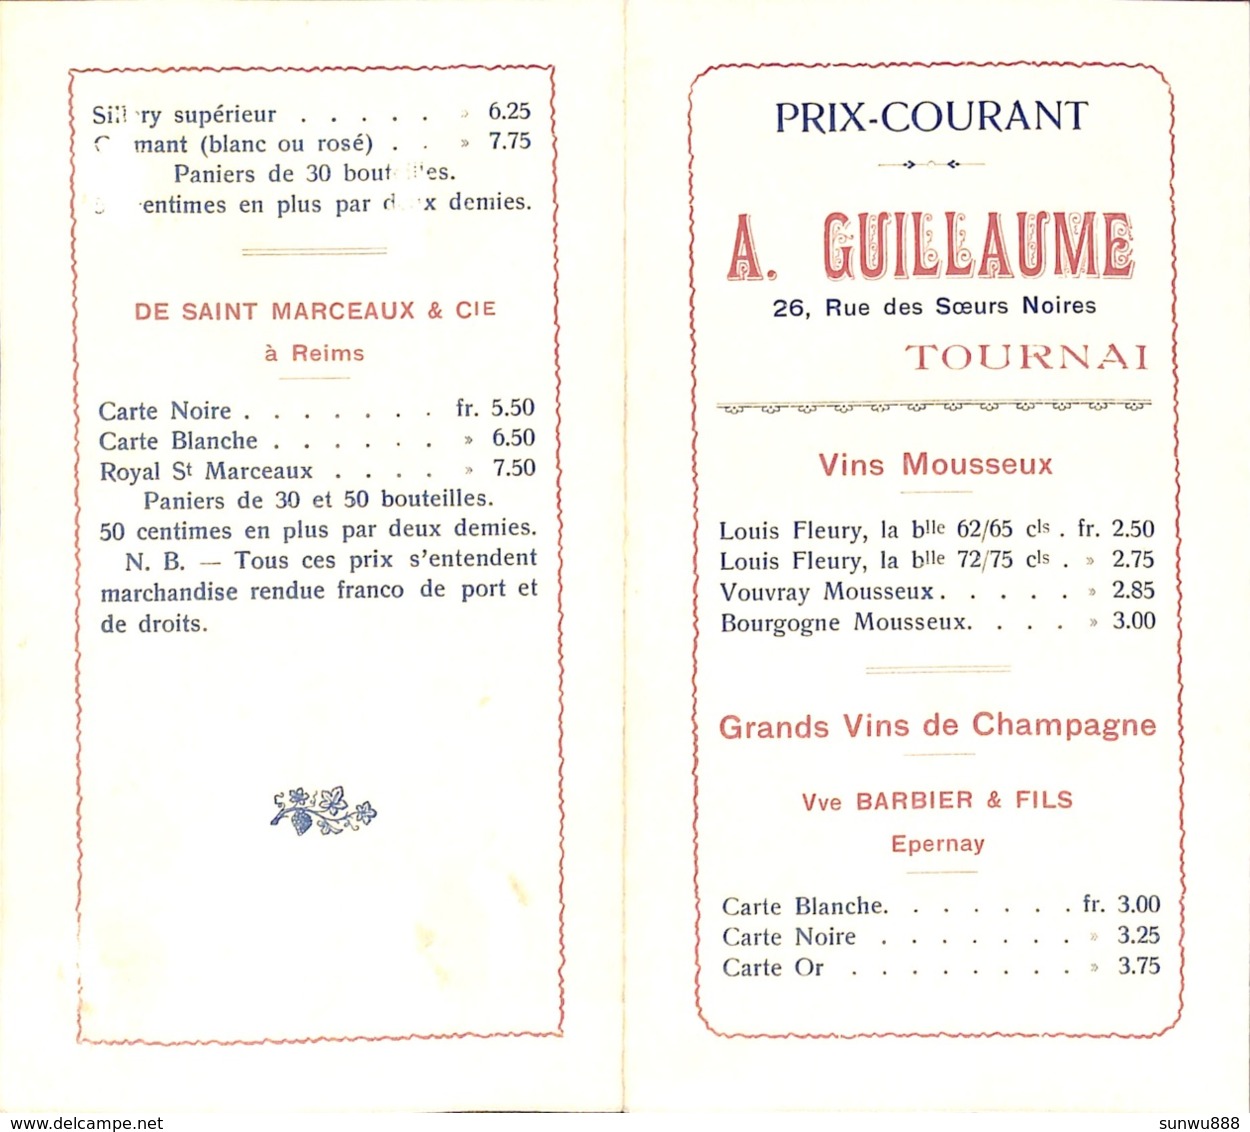 Prix-Courant A. Guillaume Tournai - Vins Mousseux, Champagne Epernay, Crémant... - Levensmiddelen